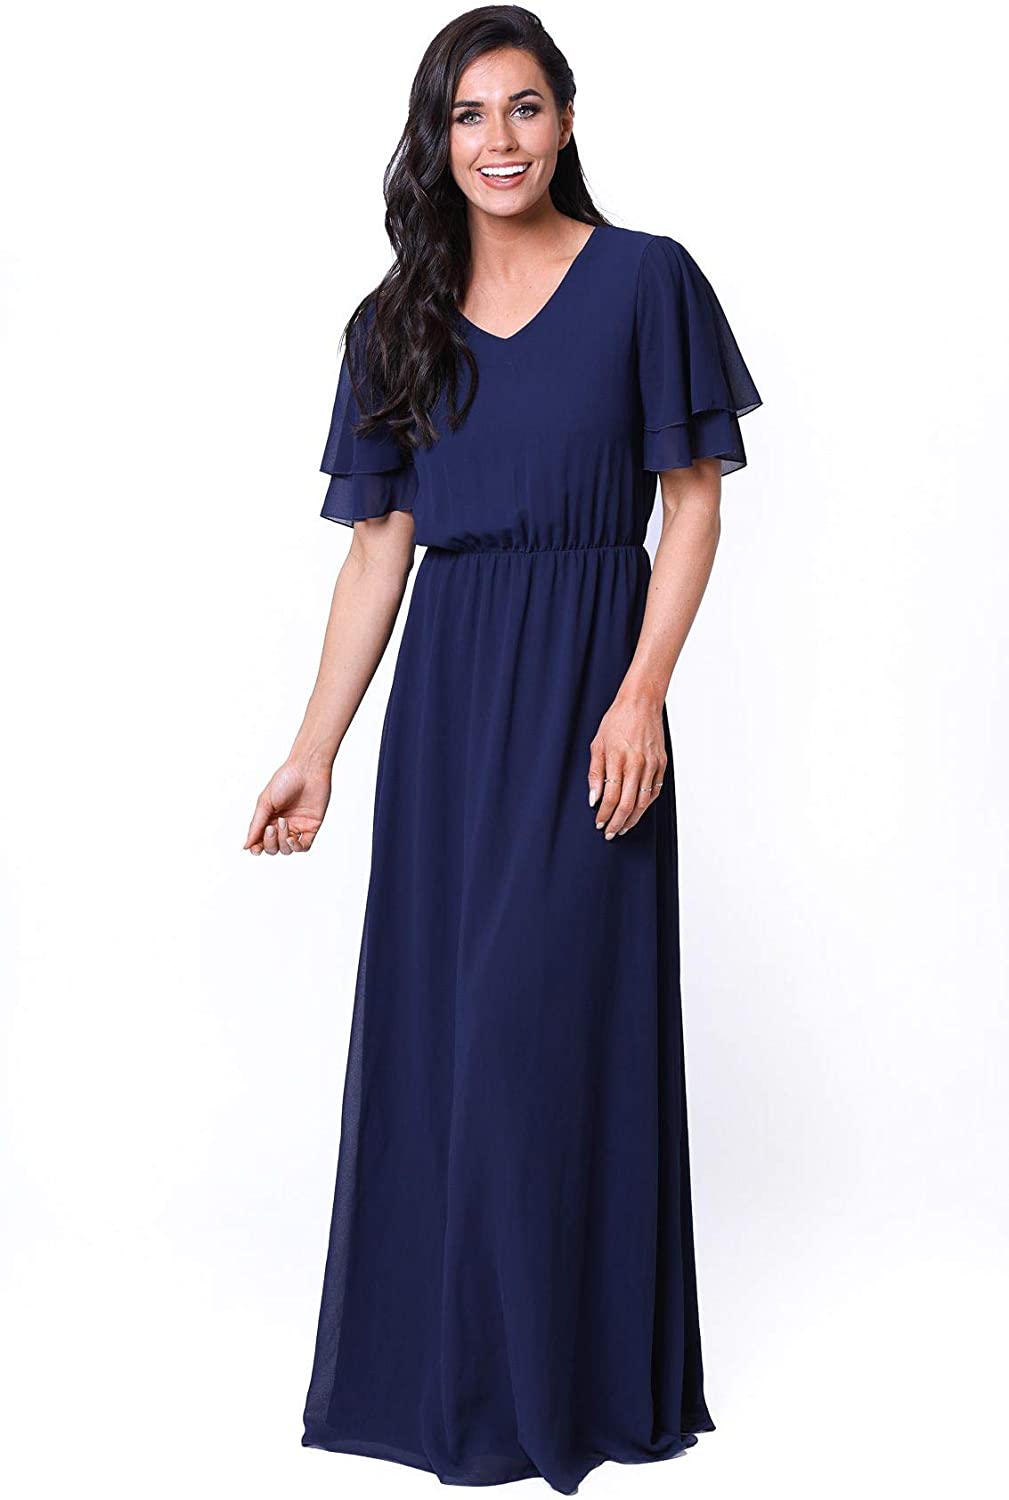 Jen Clothing Modest Clothing: LDS Modest Dresses, Modest Dresses